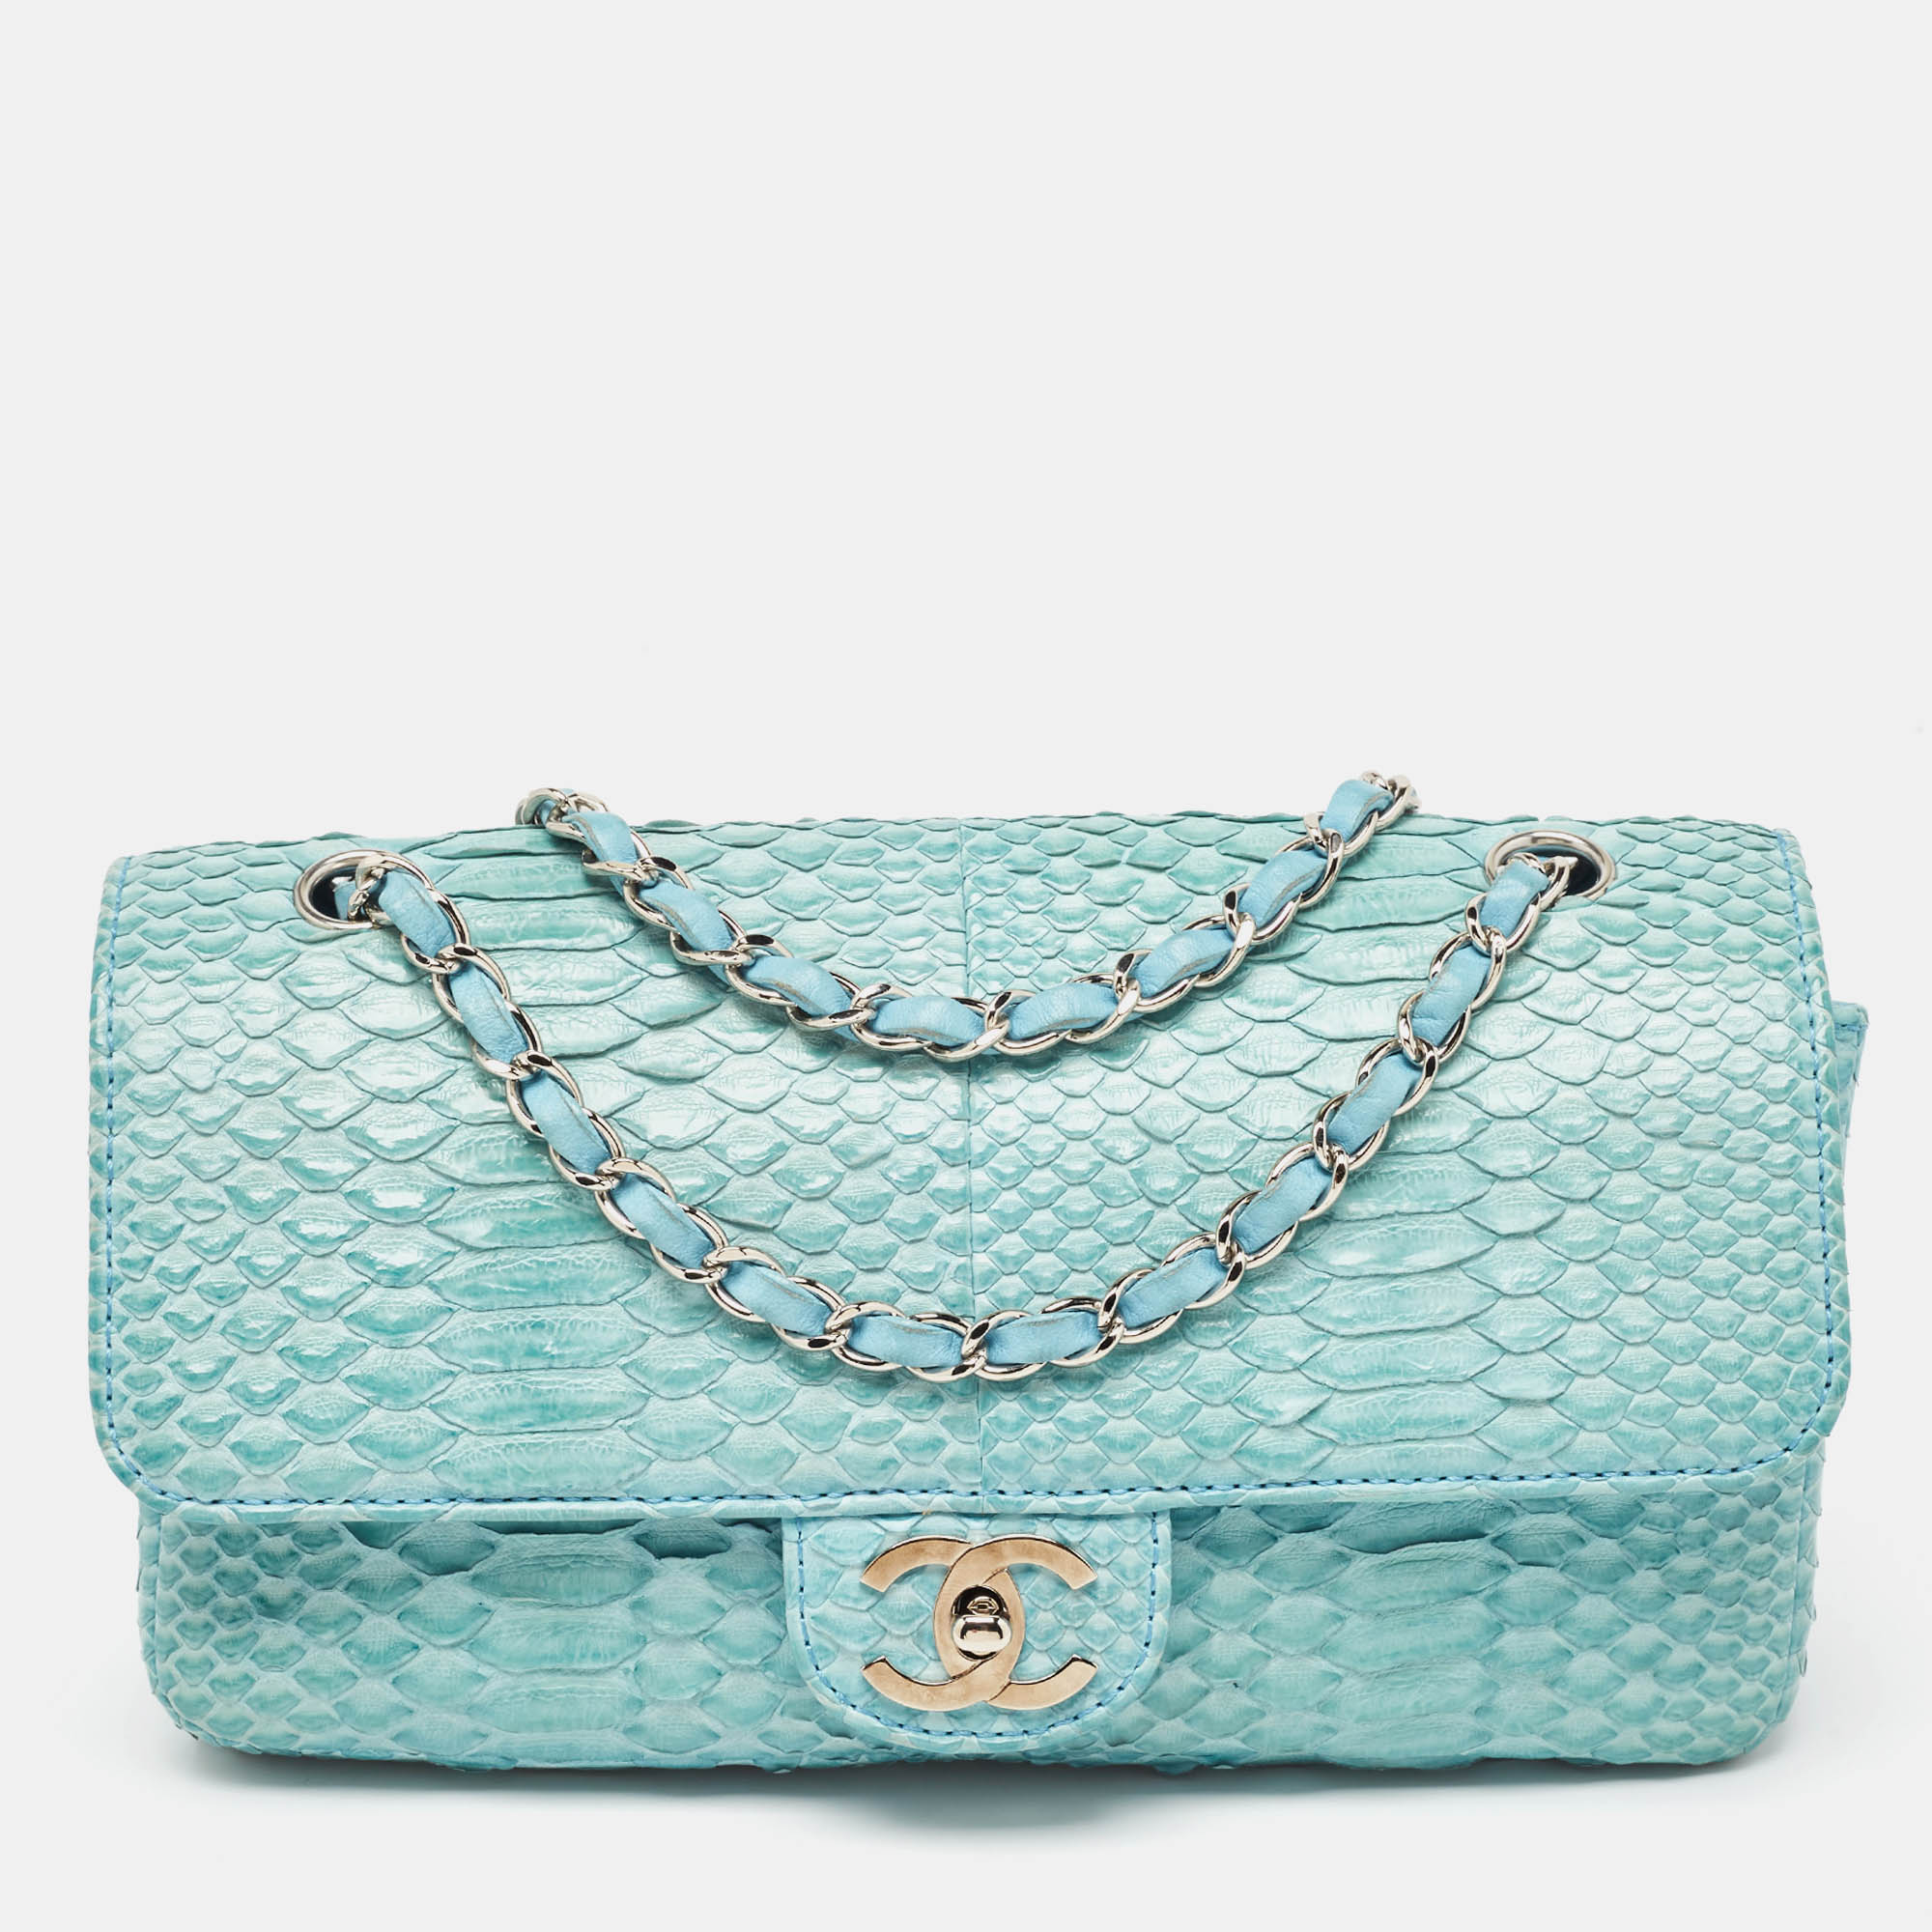 Chanel light blue python medium classic single flap bag